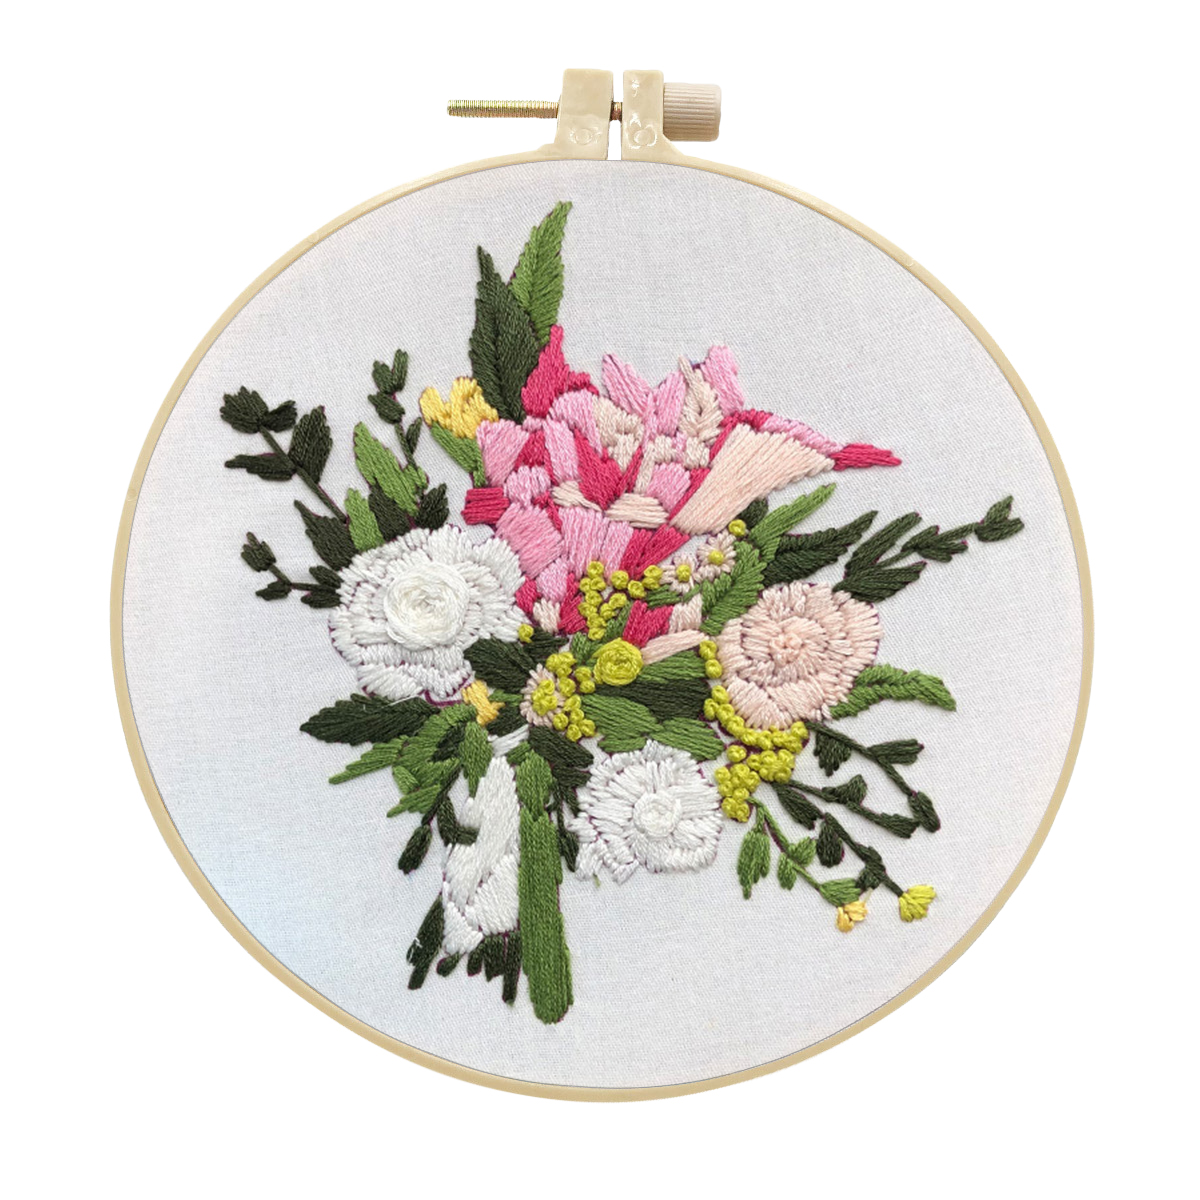 DIY Handmade Embroidery Kit Craft Cross Stitch Kits Beginner - White flowers Bouquet Pattern